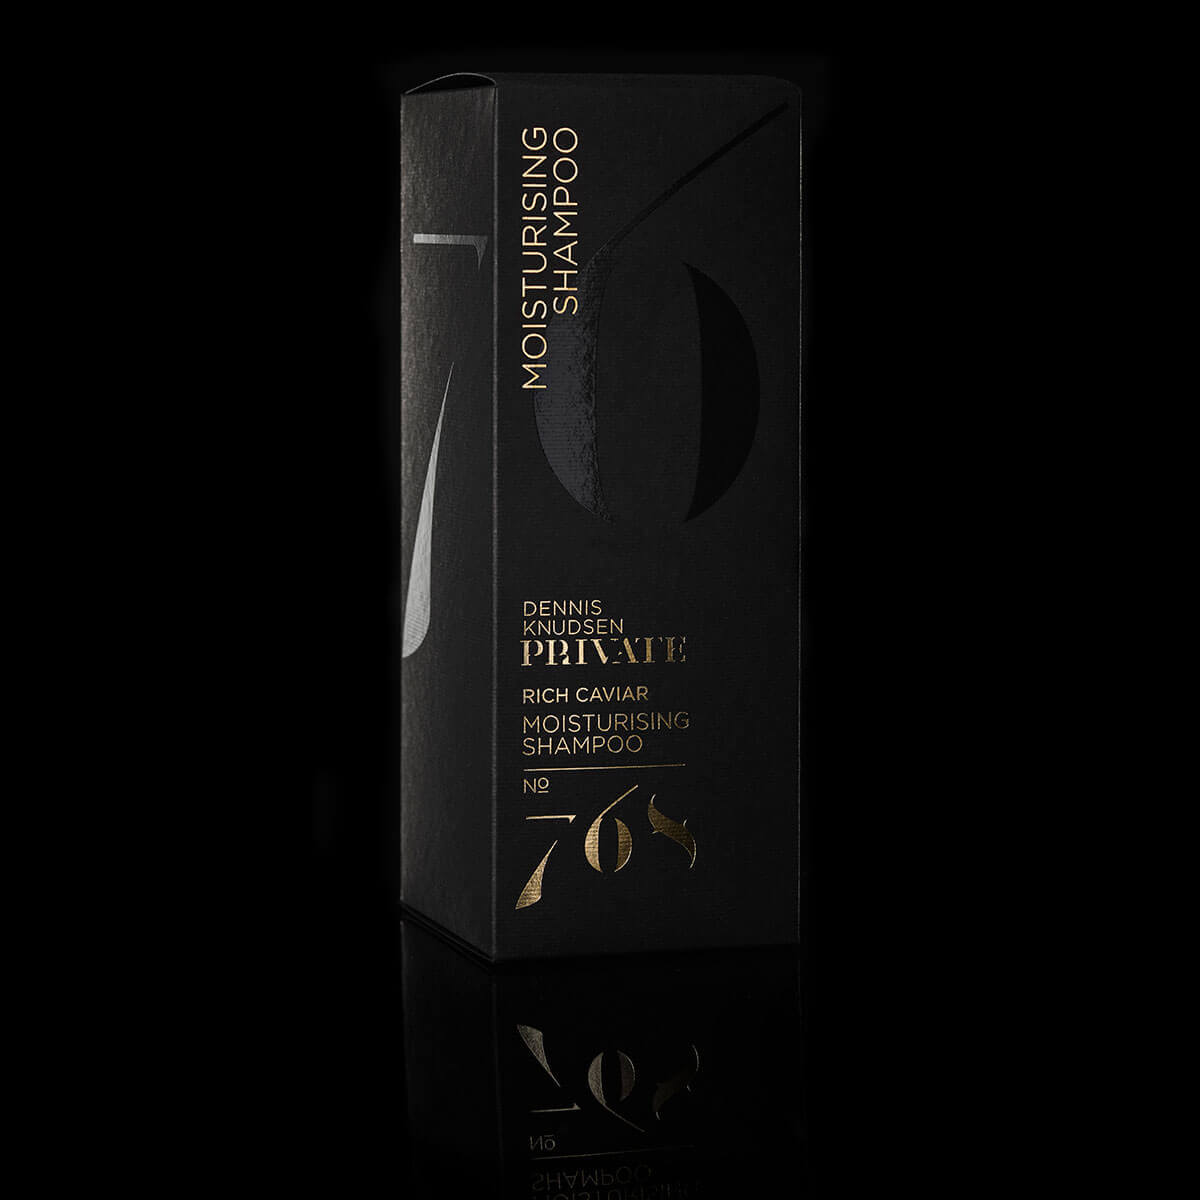 rich caviar moisturising shampoo 768 dennis knudsen private box side